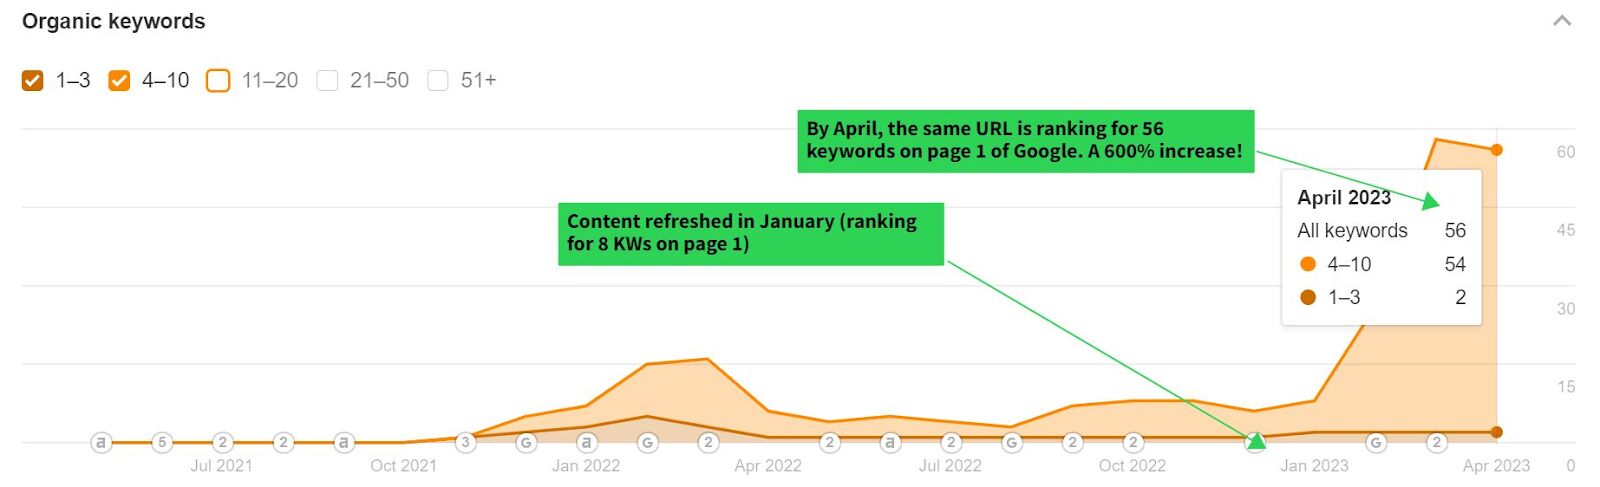 organic keyword ranking performance increasing over 12 months